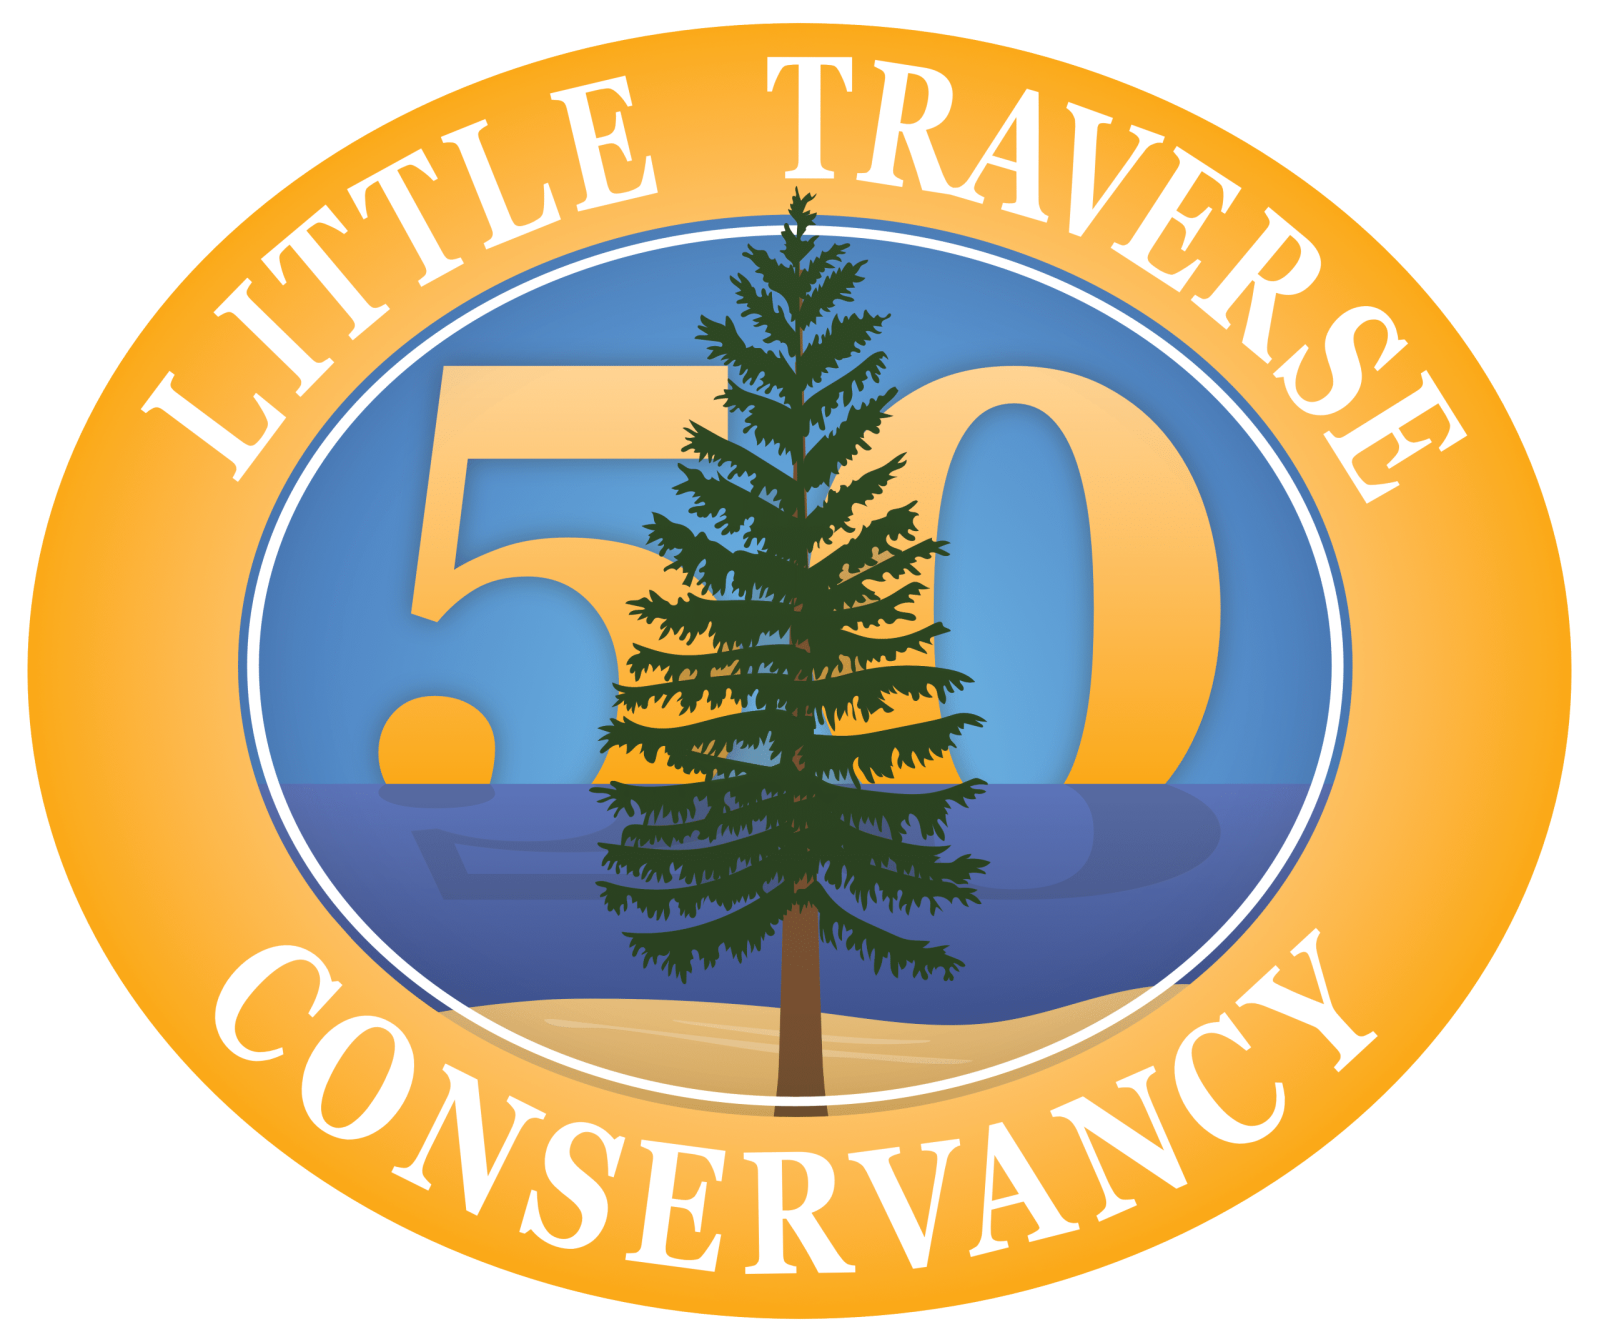 Little traverse conservancy logo